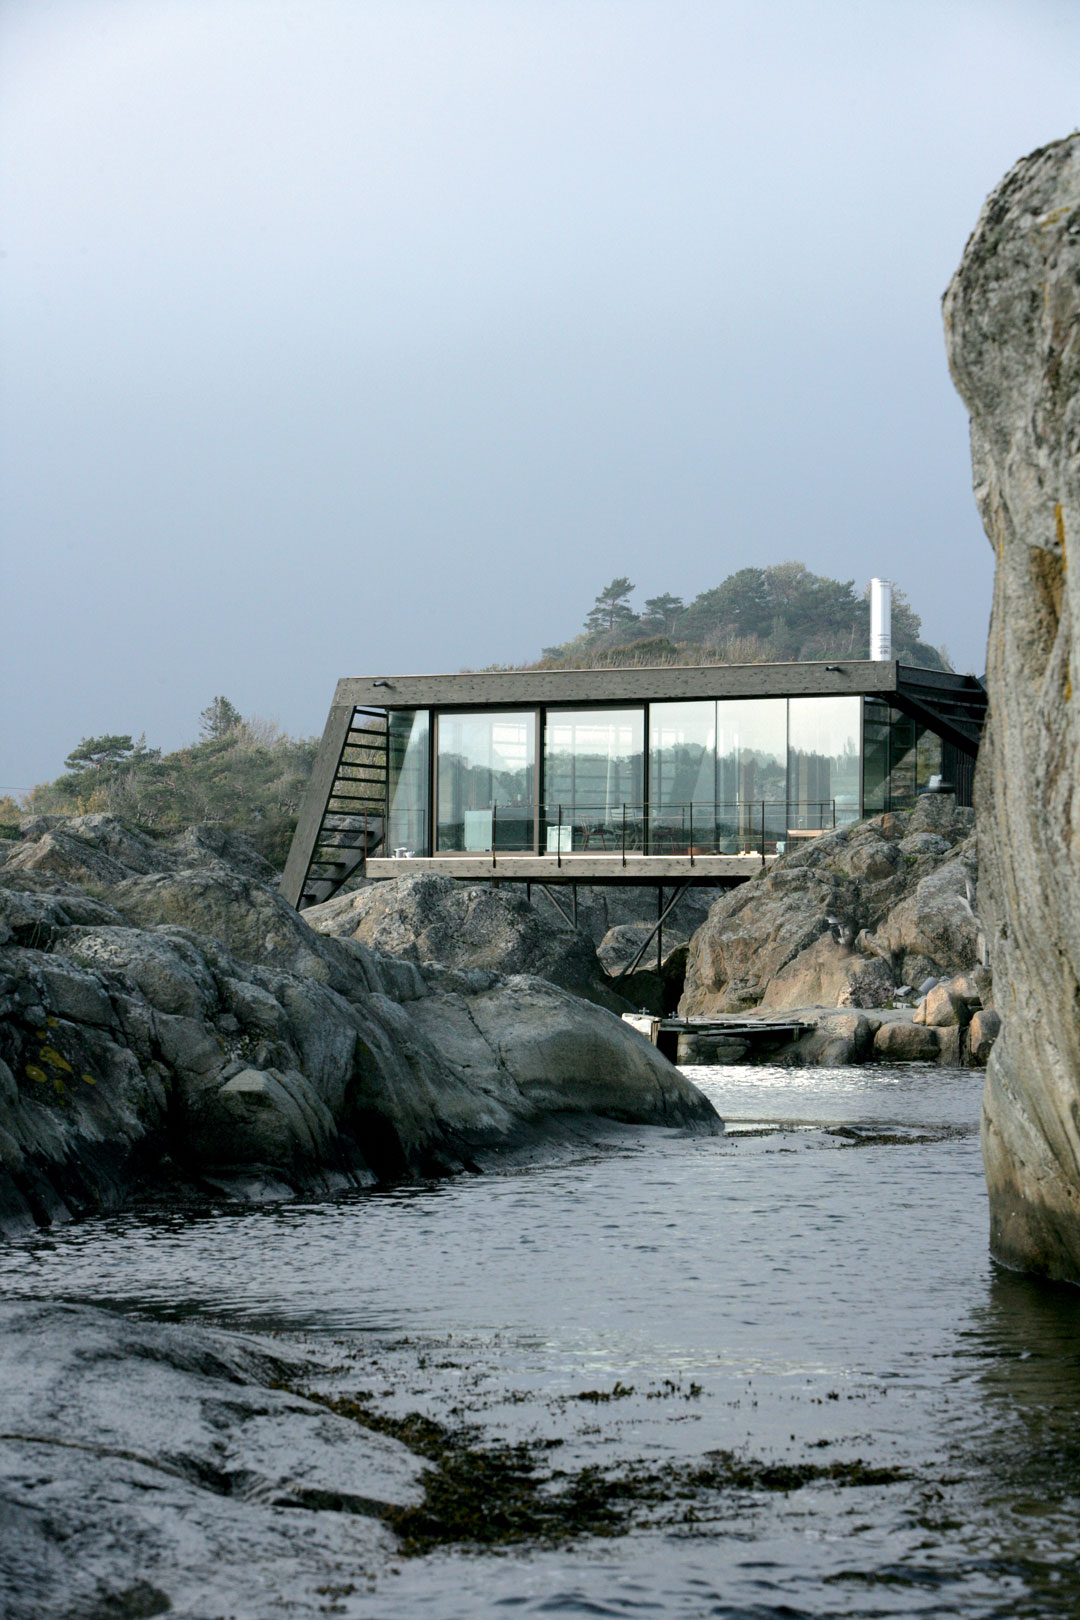 Cabin Lille Arøya, (Lund Hagem Architects) 2014, Larvik, Norway. Photograph by Ivar Kvaal